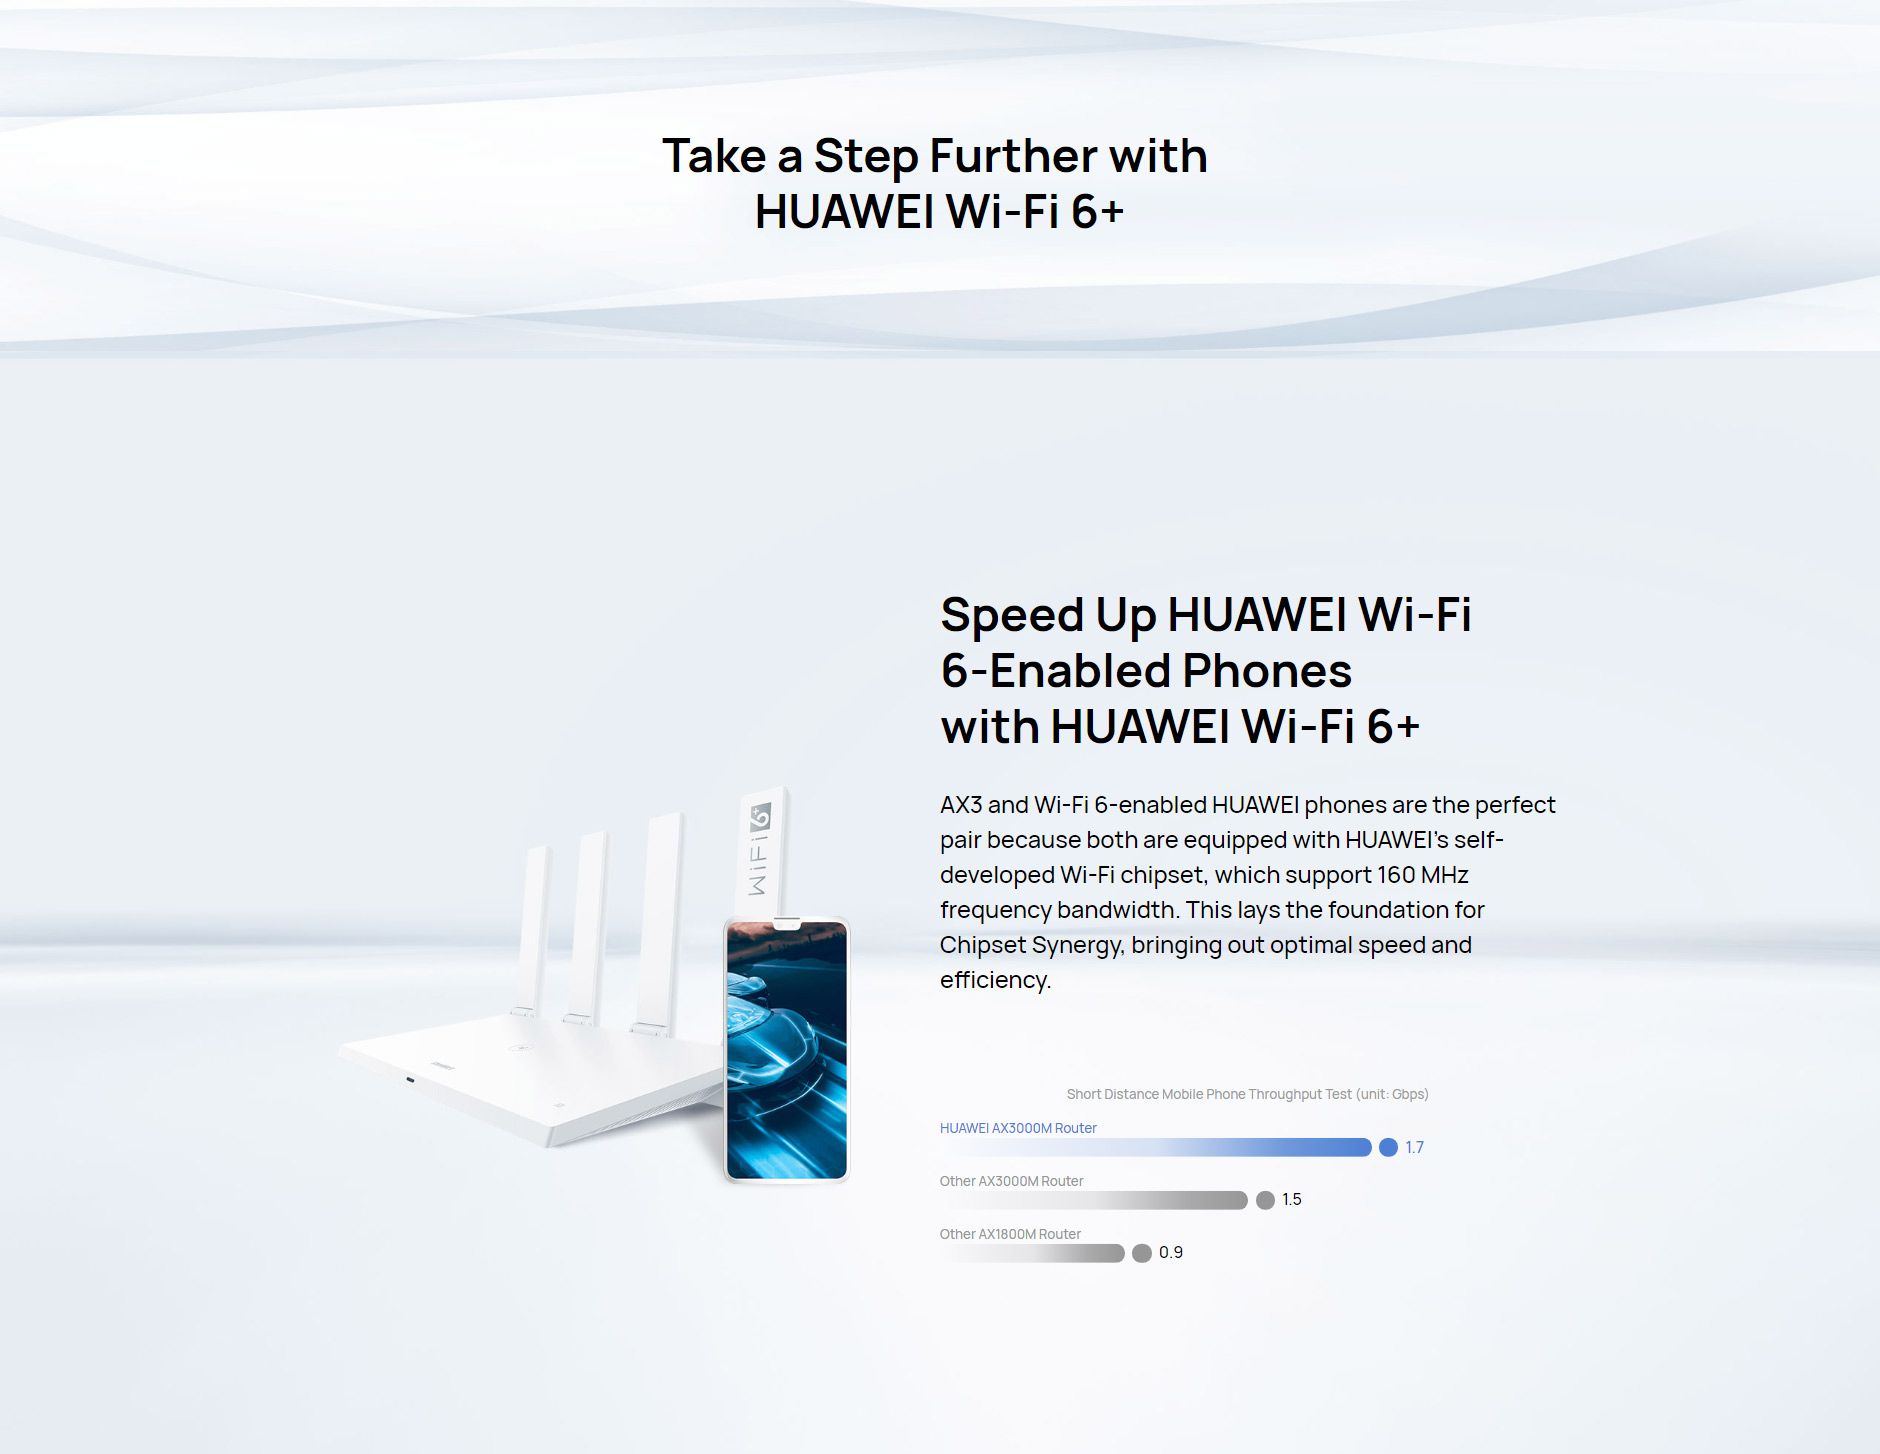 HUAWEI-WiFi-AX3-Pro-Quad-core-Wi-Fi-6-WiFi-Router-Mesh-Networking-3000Mbps-Huawei-Share-HarmonyOS-Wi-1766217